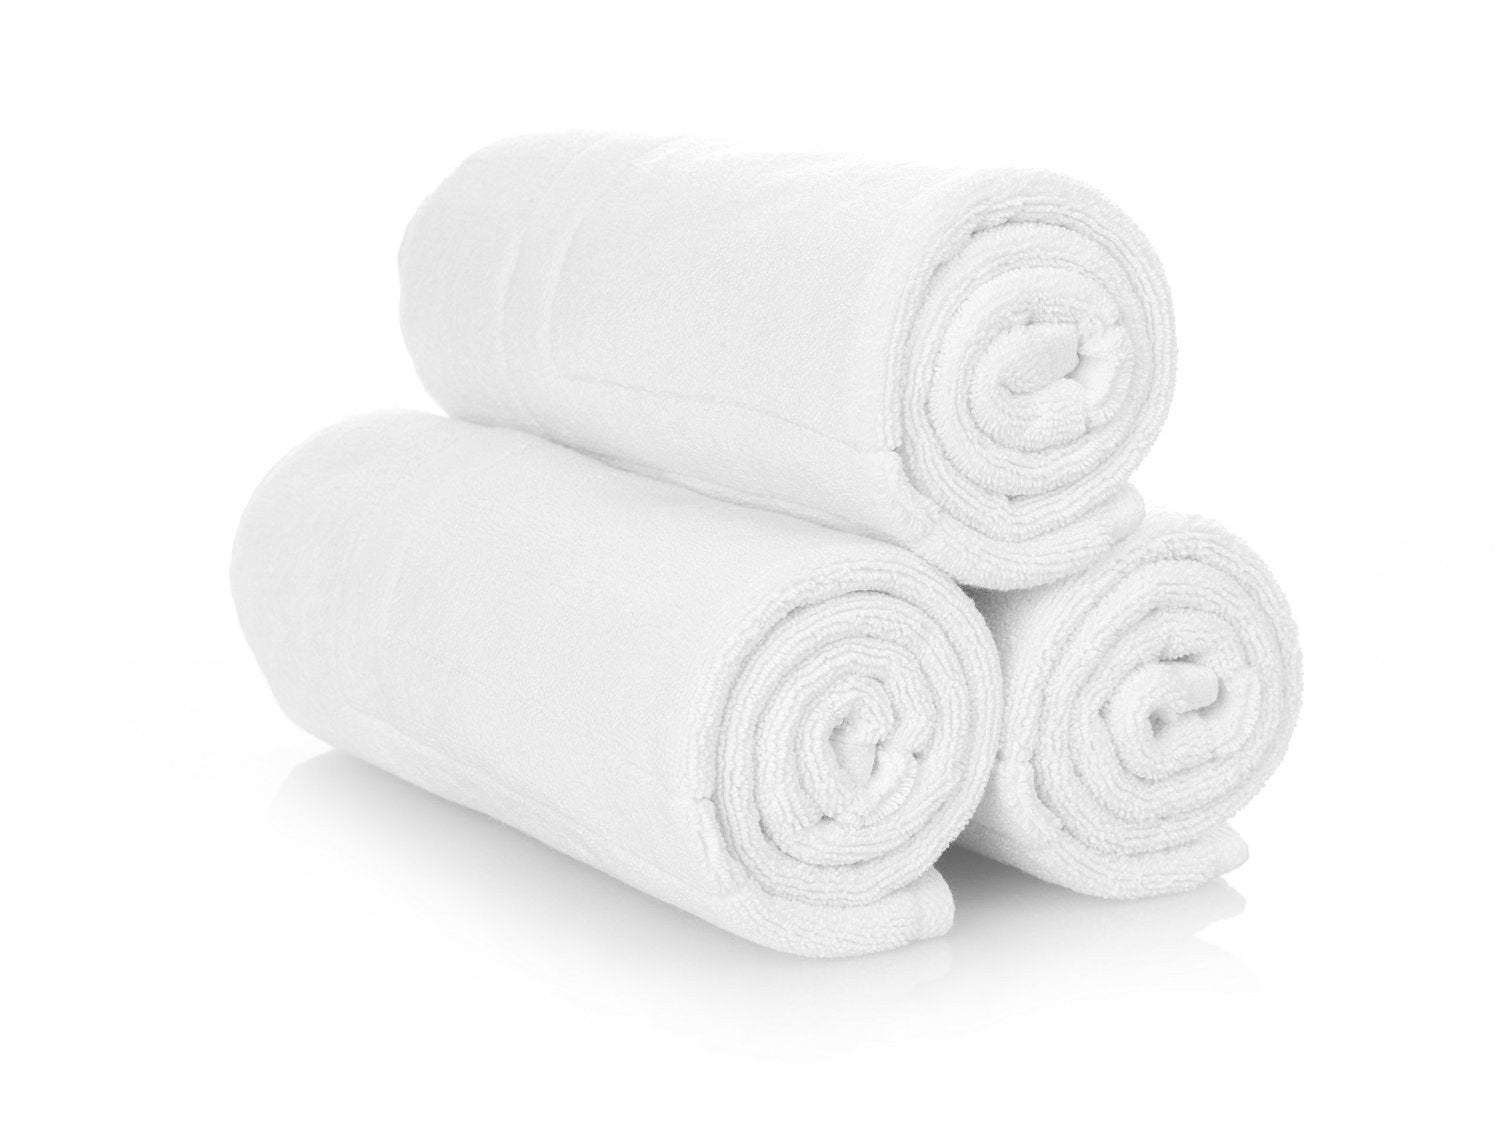 Черно белые полотенца. Полотенце. Скрученное полотенце. Полотенца сложенные в рулон. Сложенные белые полотенца.